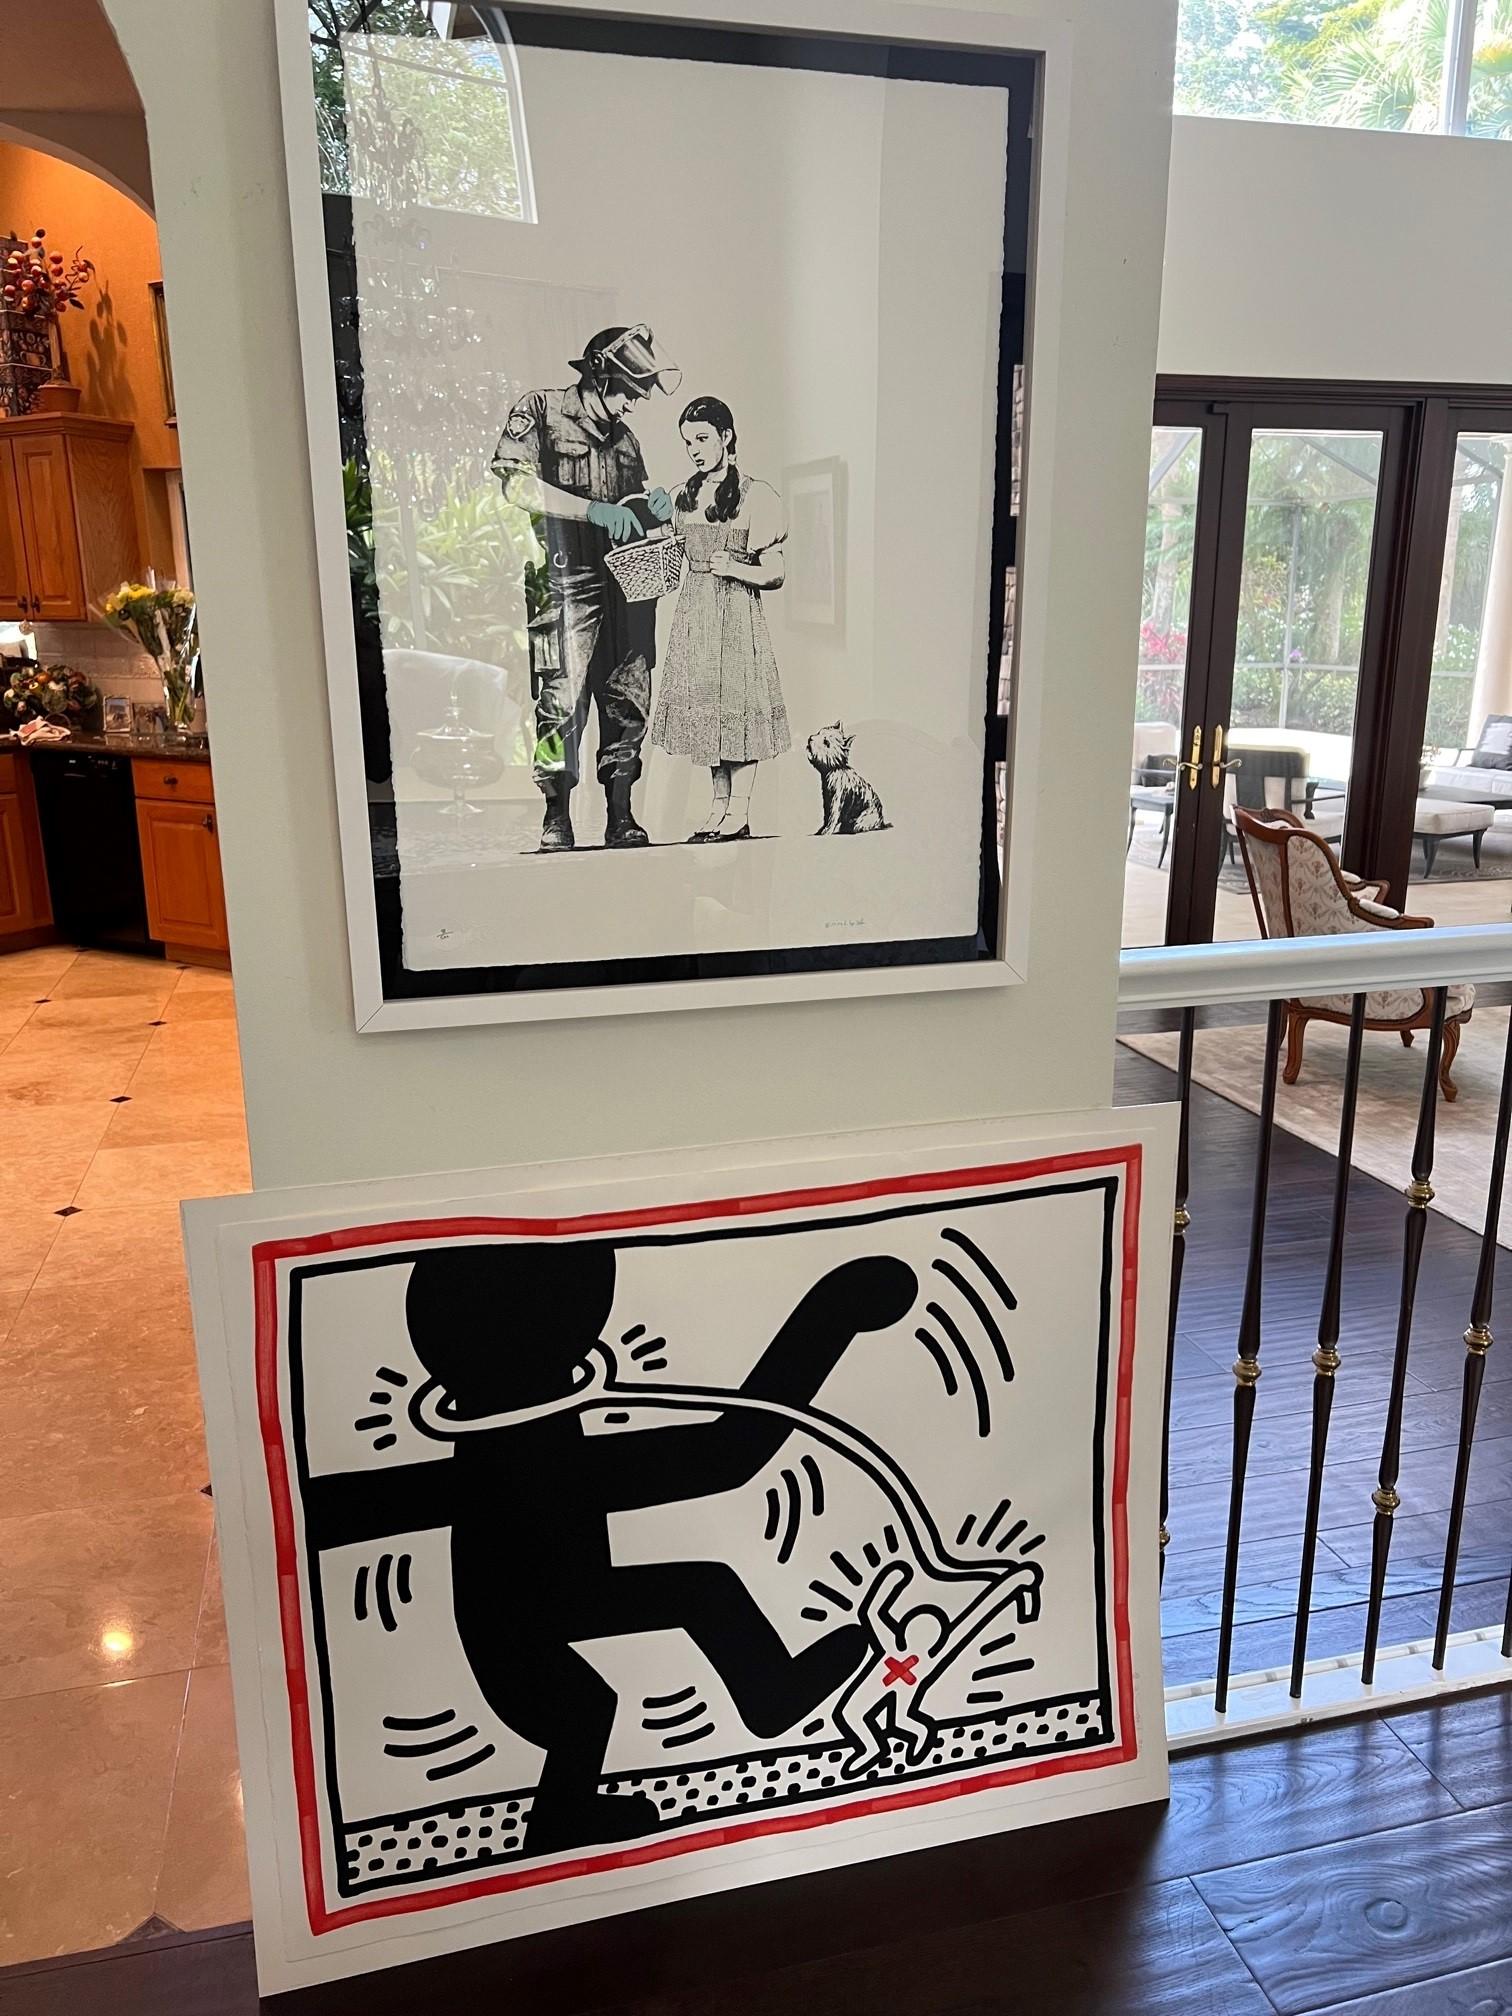 2 de Free South Africa - Noir Print par Keith Haring